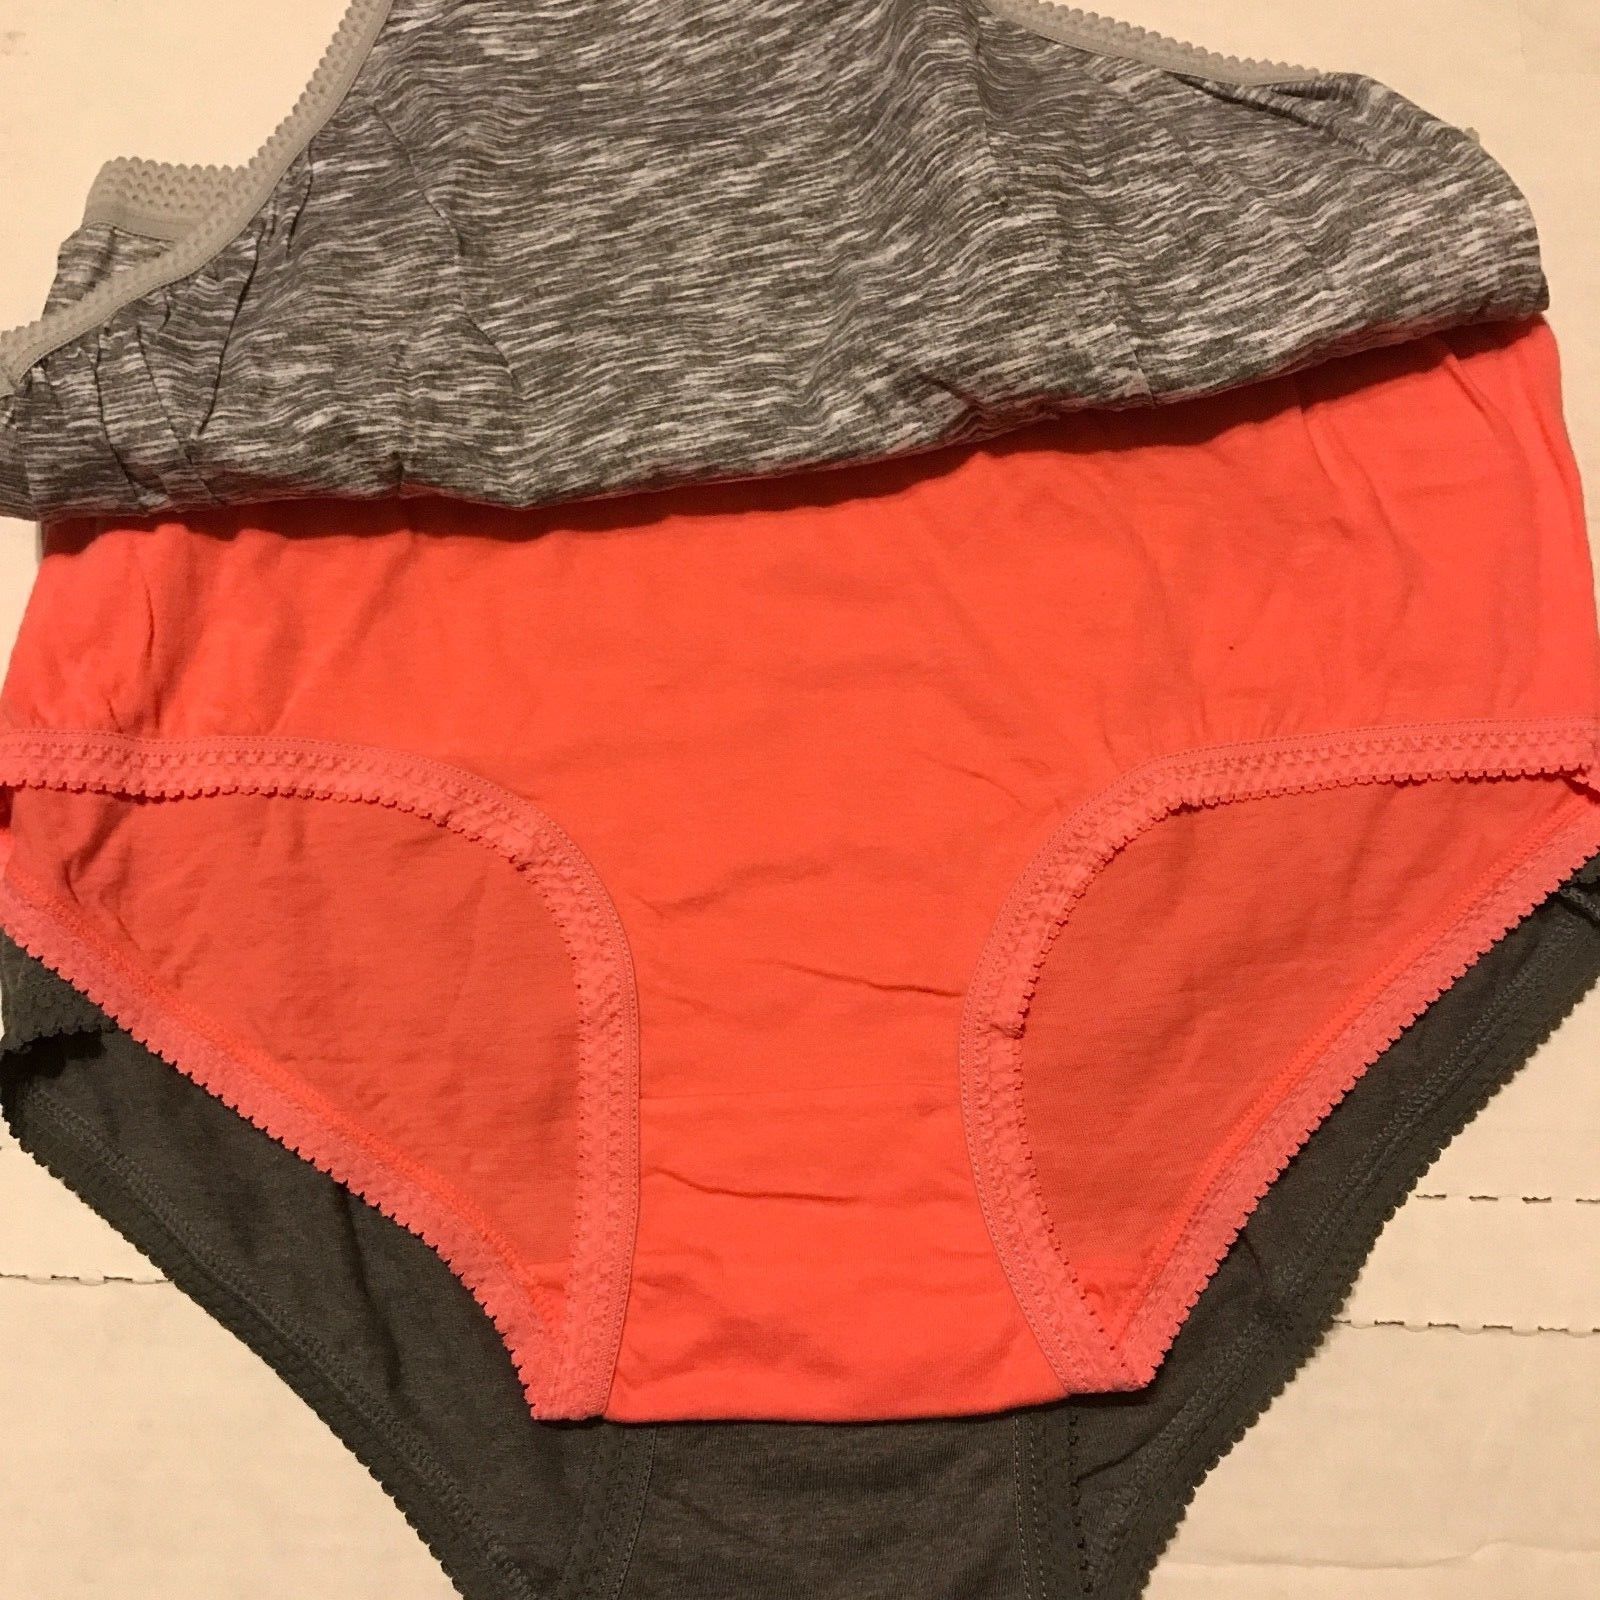 Kathy Ireland Intimates Cotton Briefs Panties 2X 3-pack - Panties